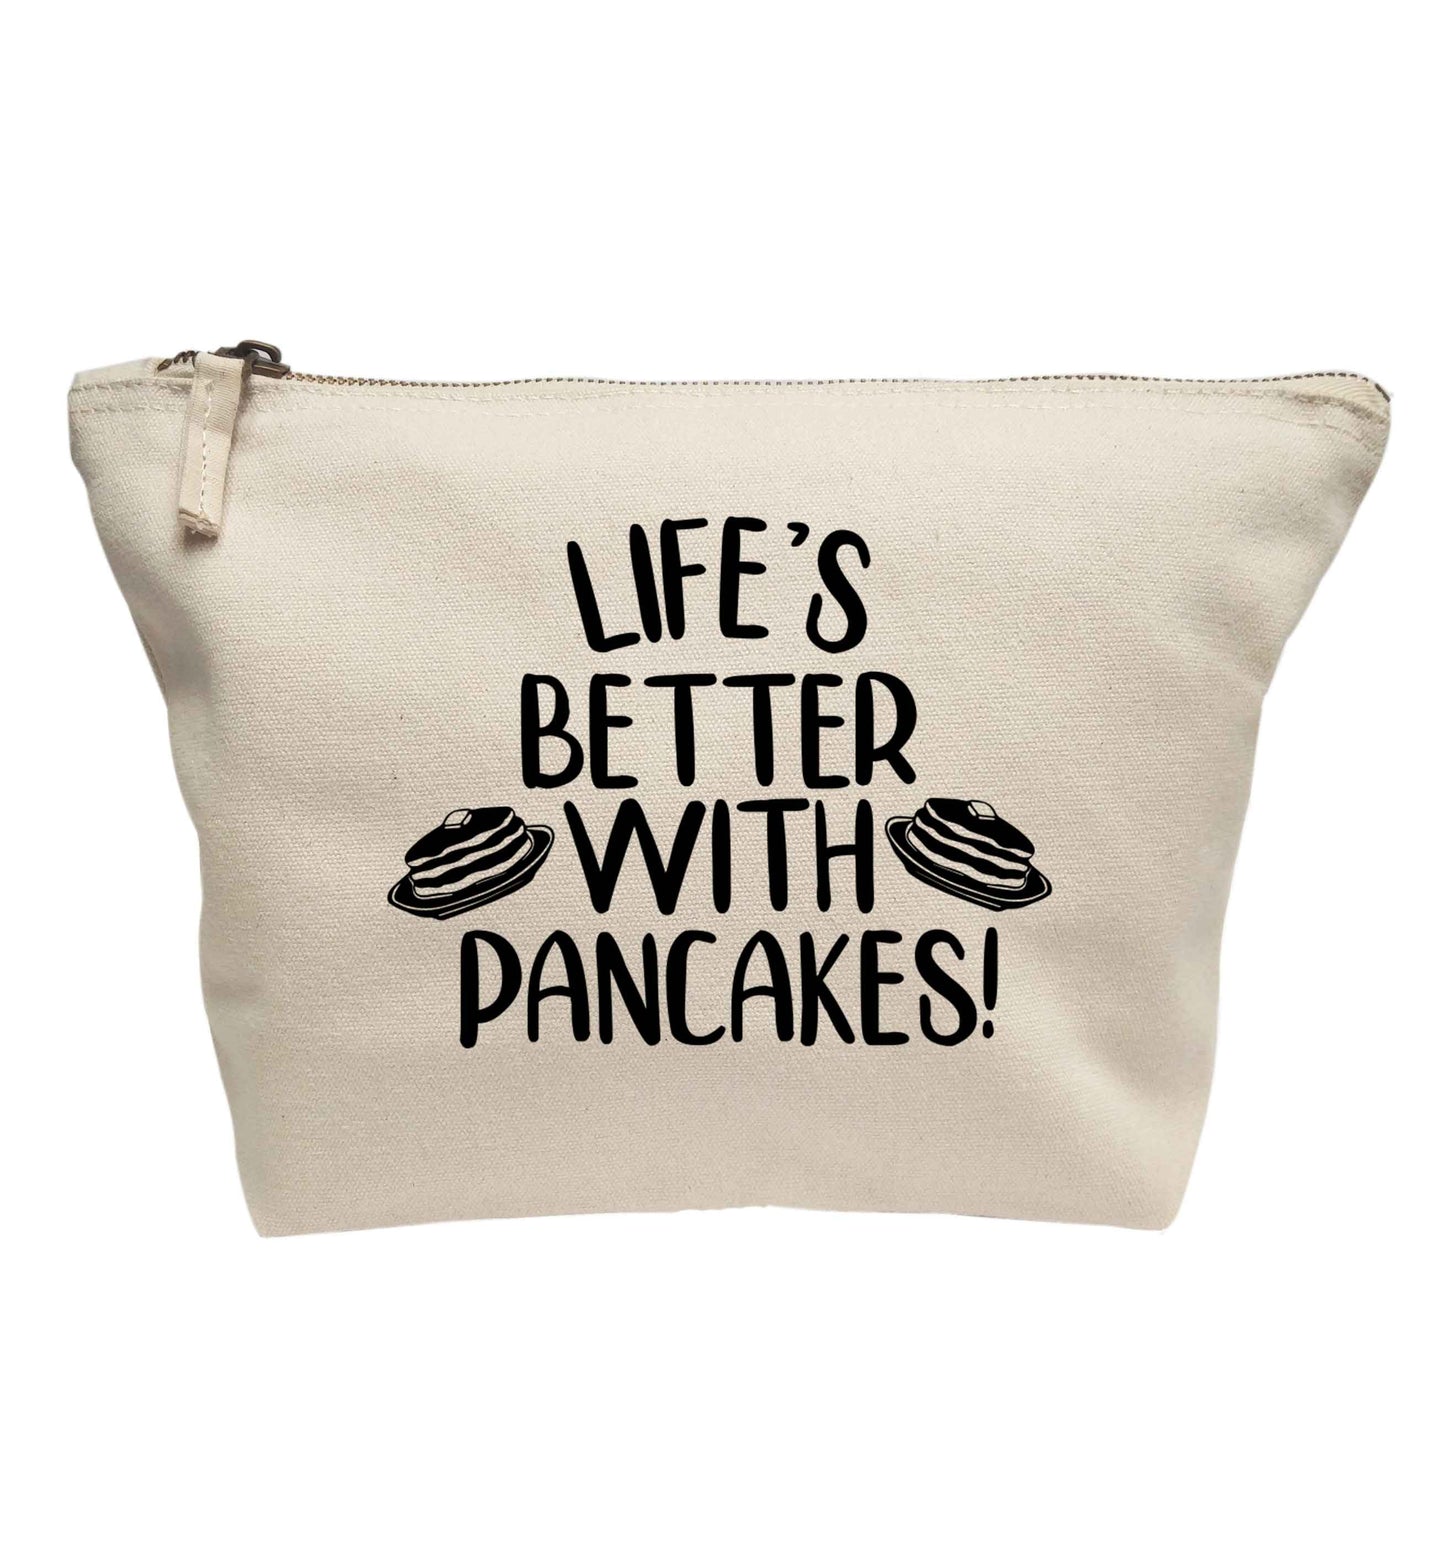 Life's better with pancakes | Makeup / wash bag